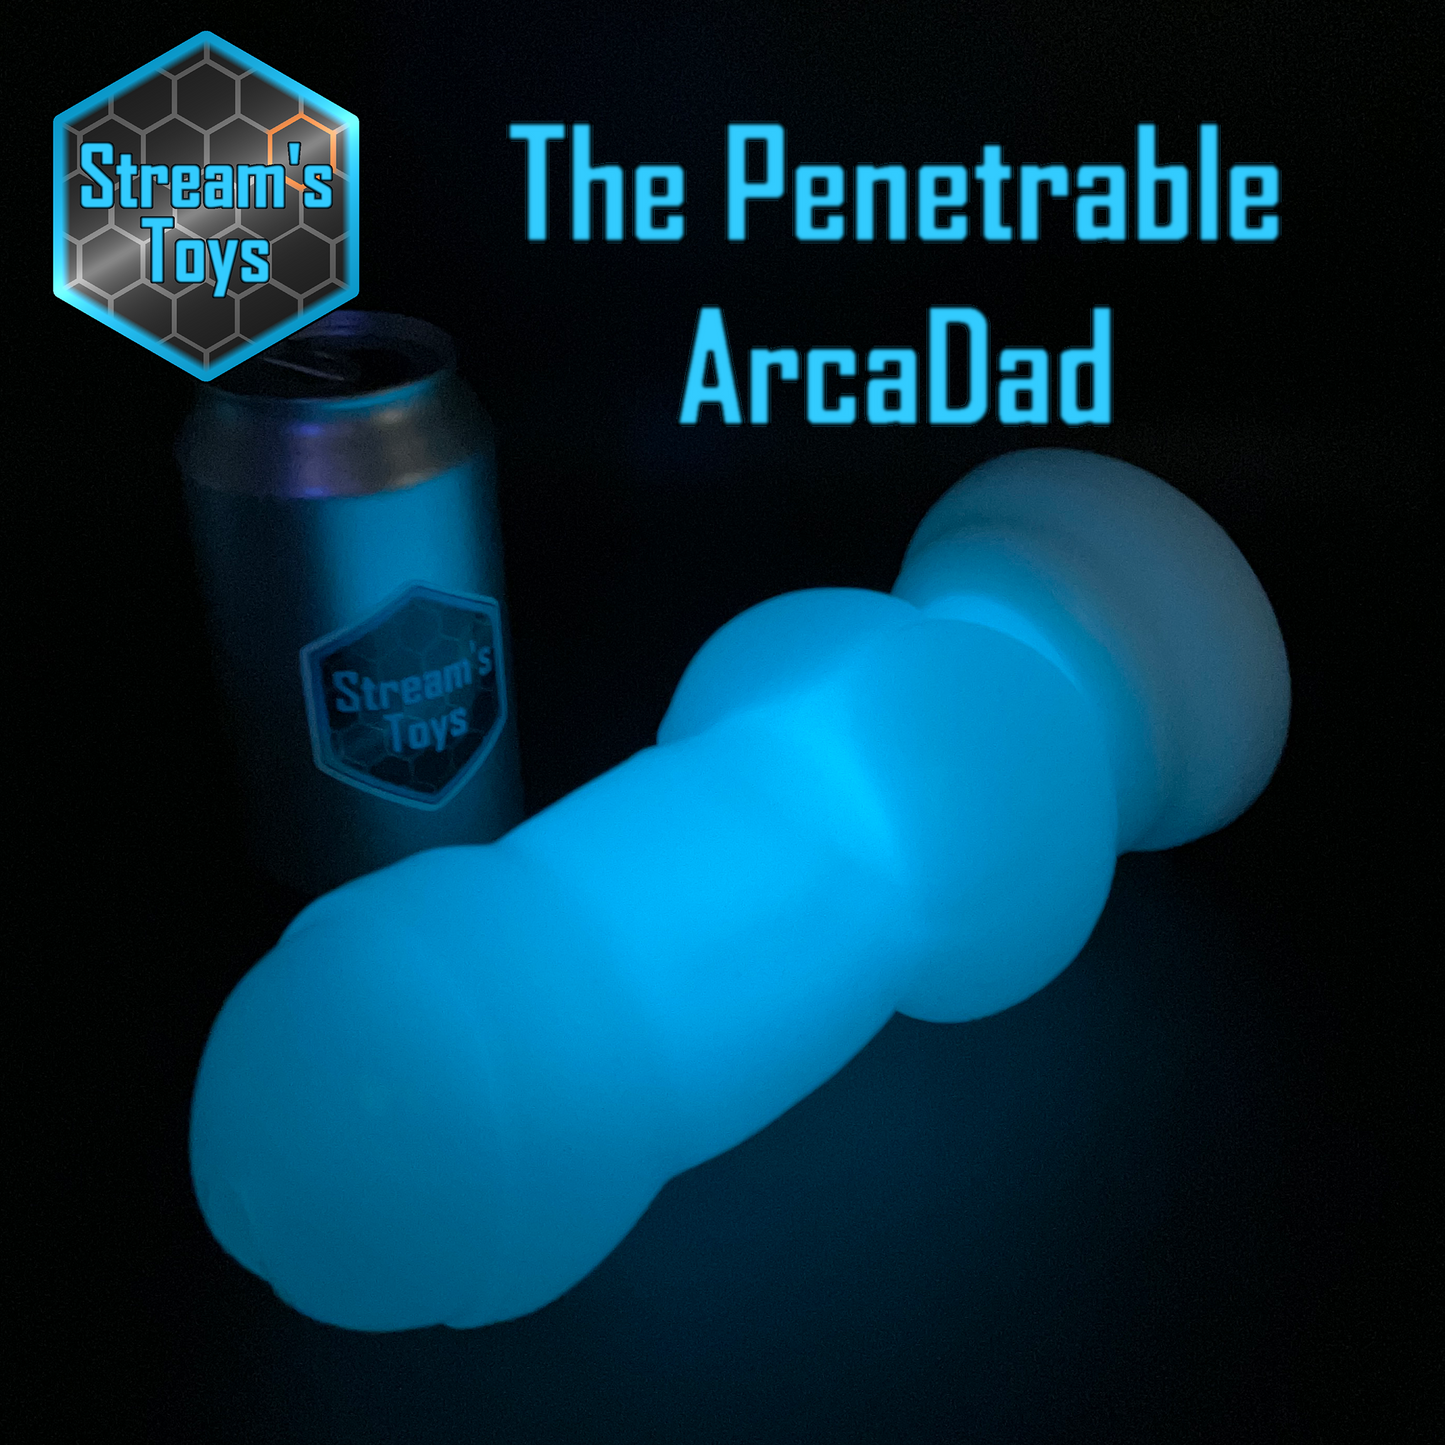 Glow-in-the-dark Penetrable ArcaDad